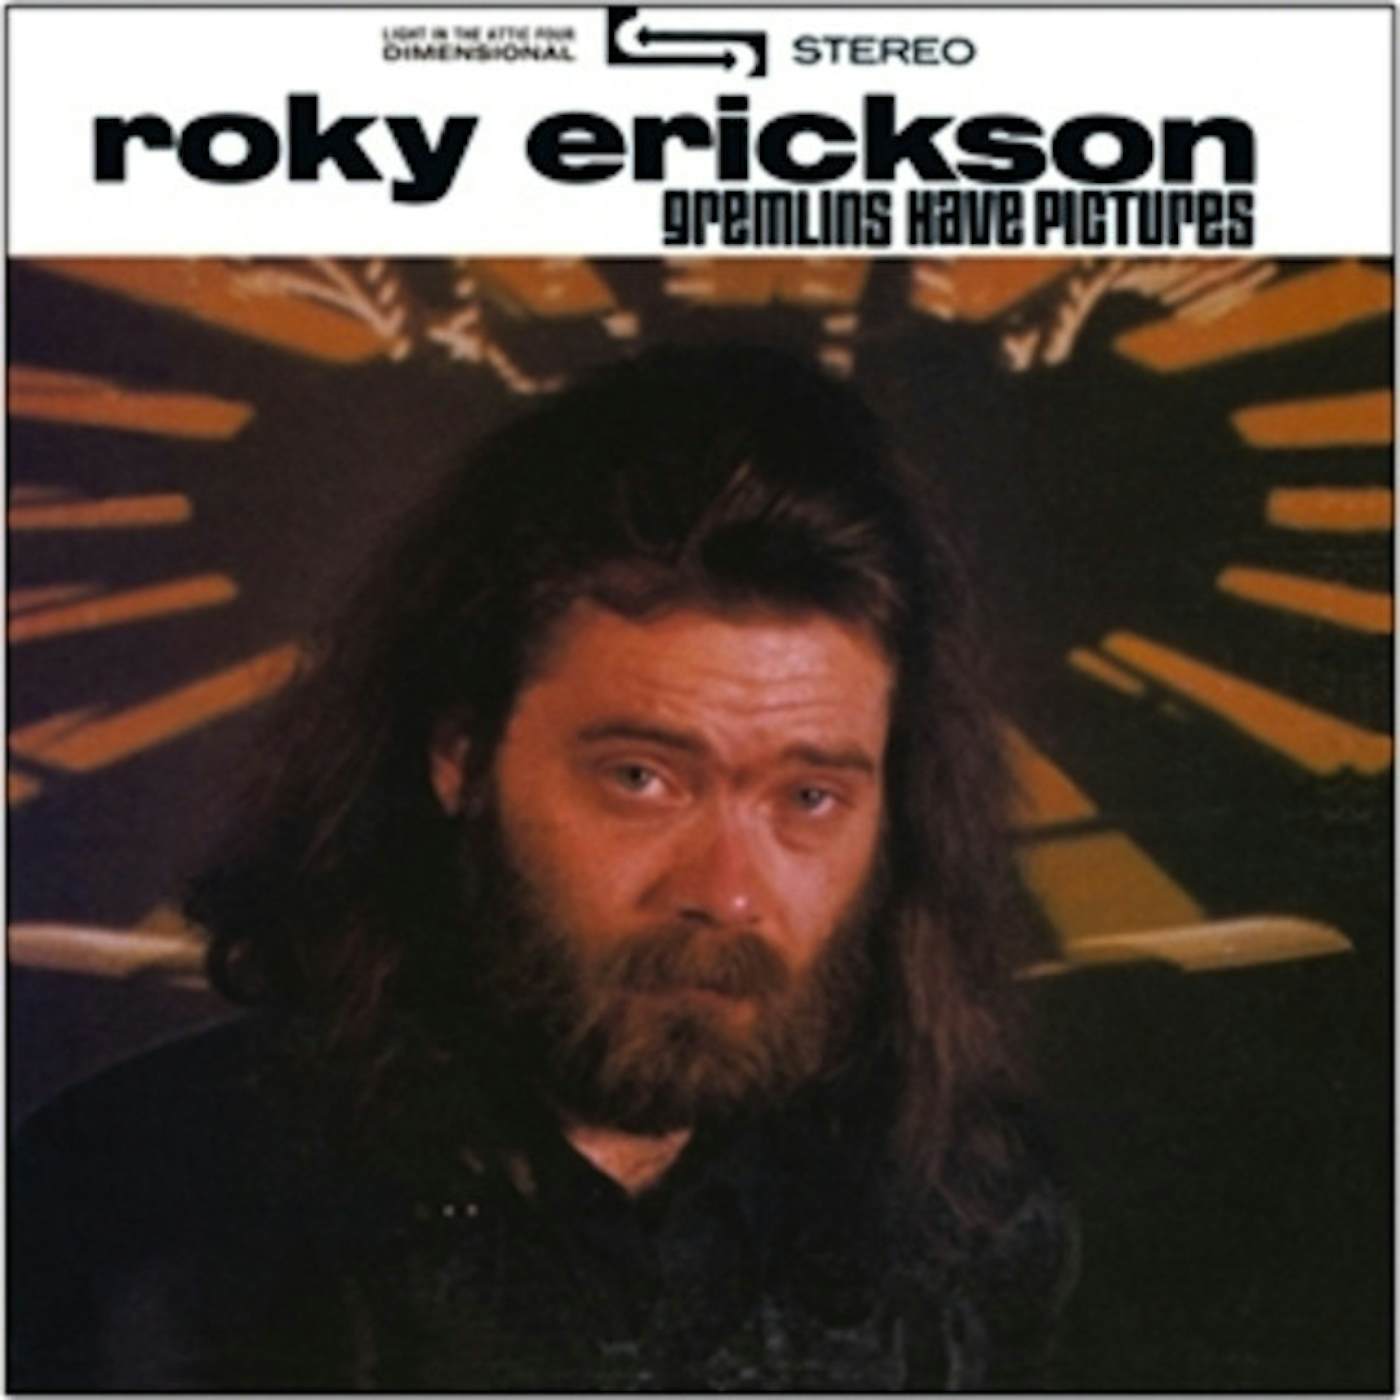 Roky Erickson Gremlins Have Pictures Vinyl Record